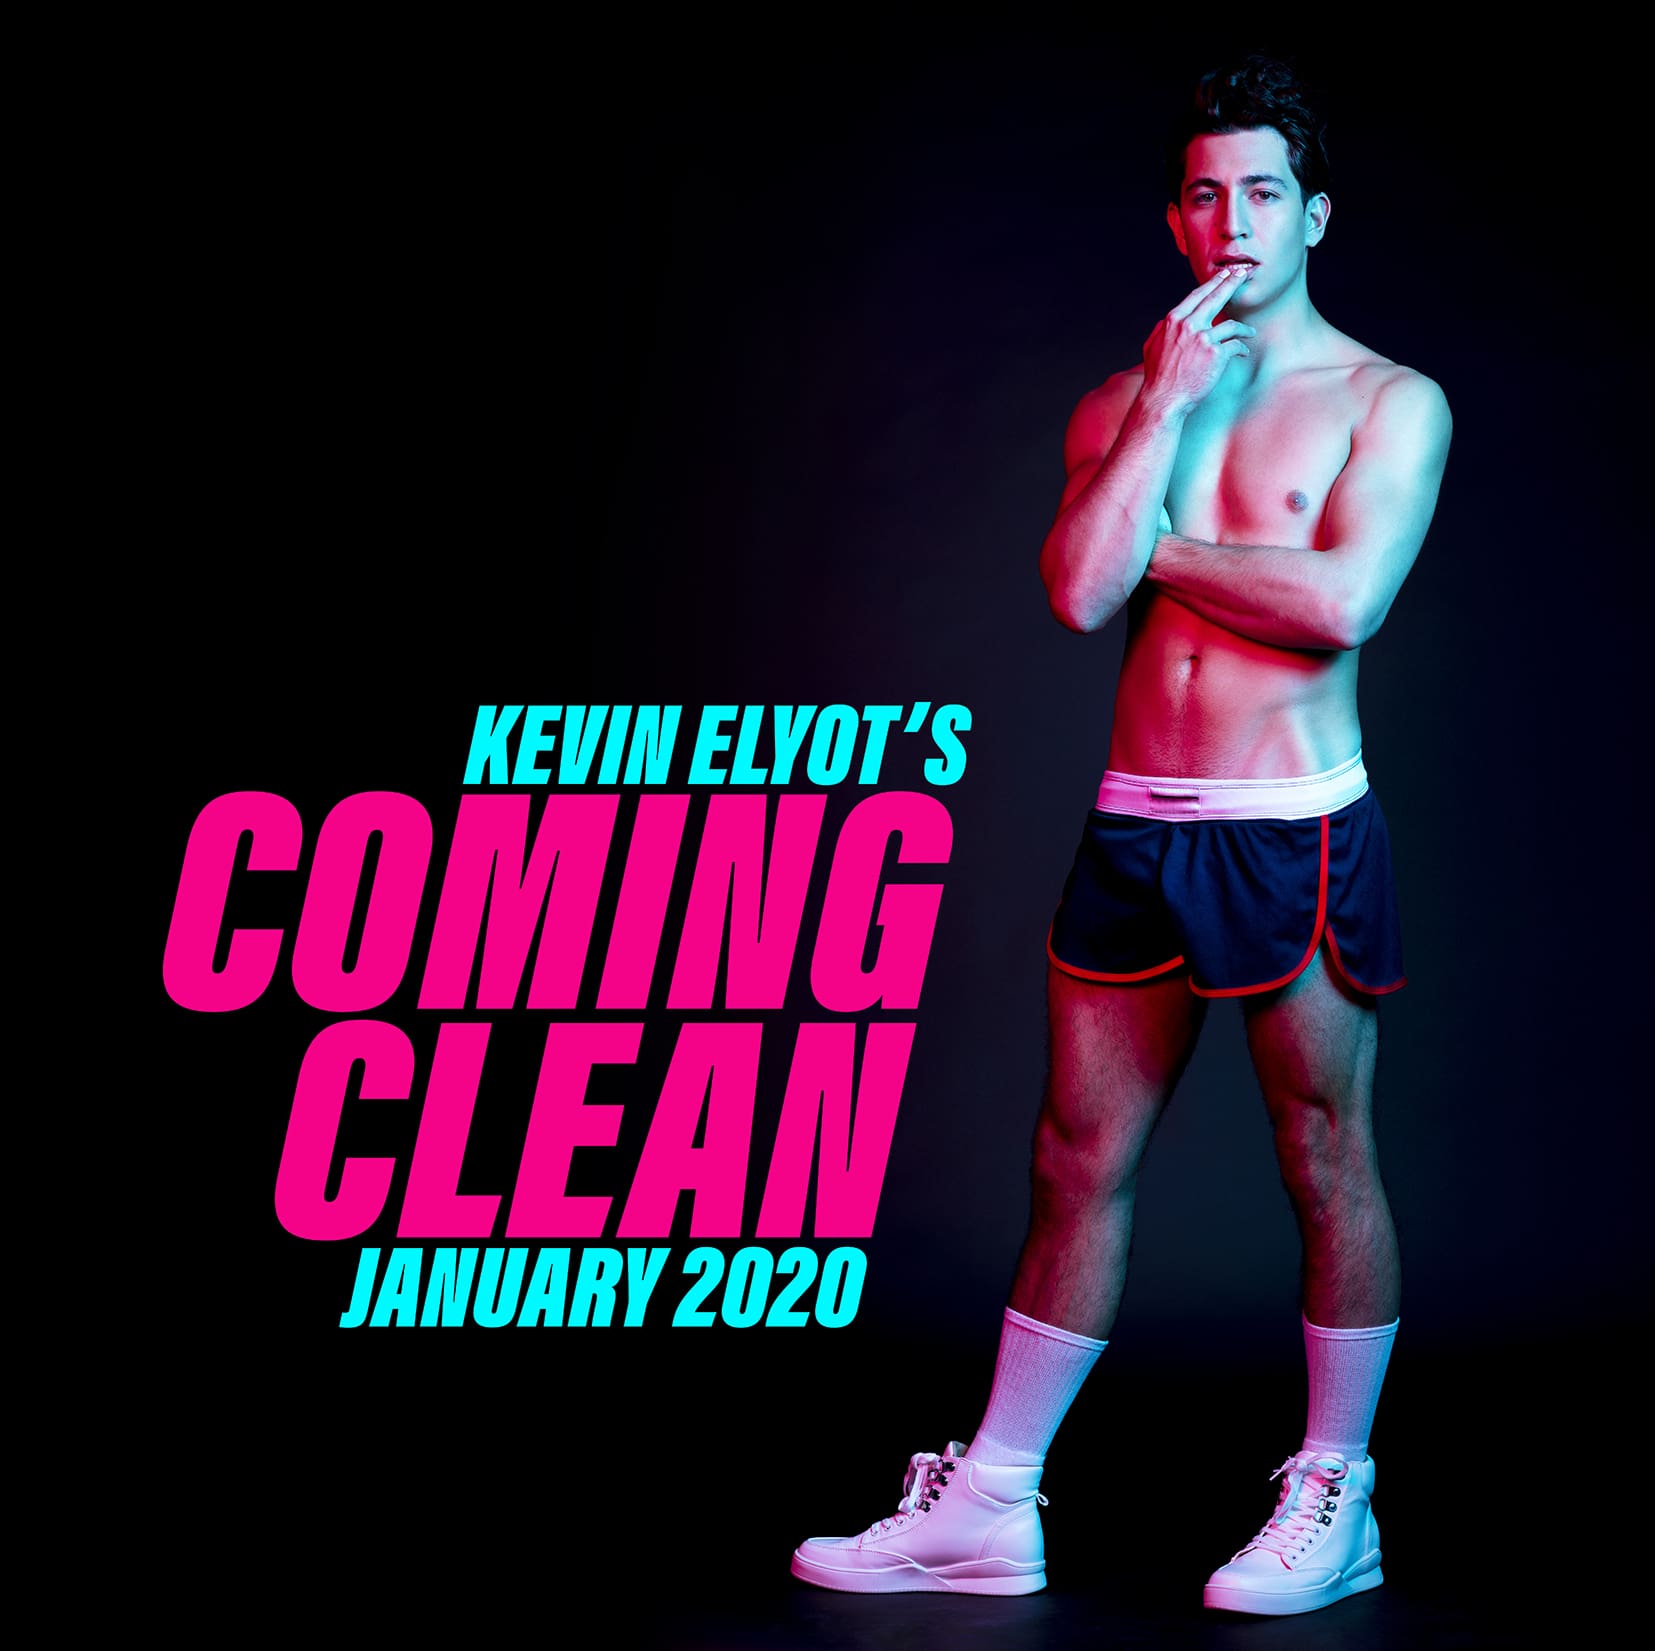 NEWS: Kevin Elyot’s Coming Clean to return to Trafalgar Studios 2 in January 2020